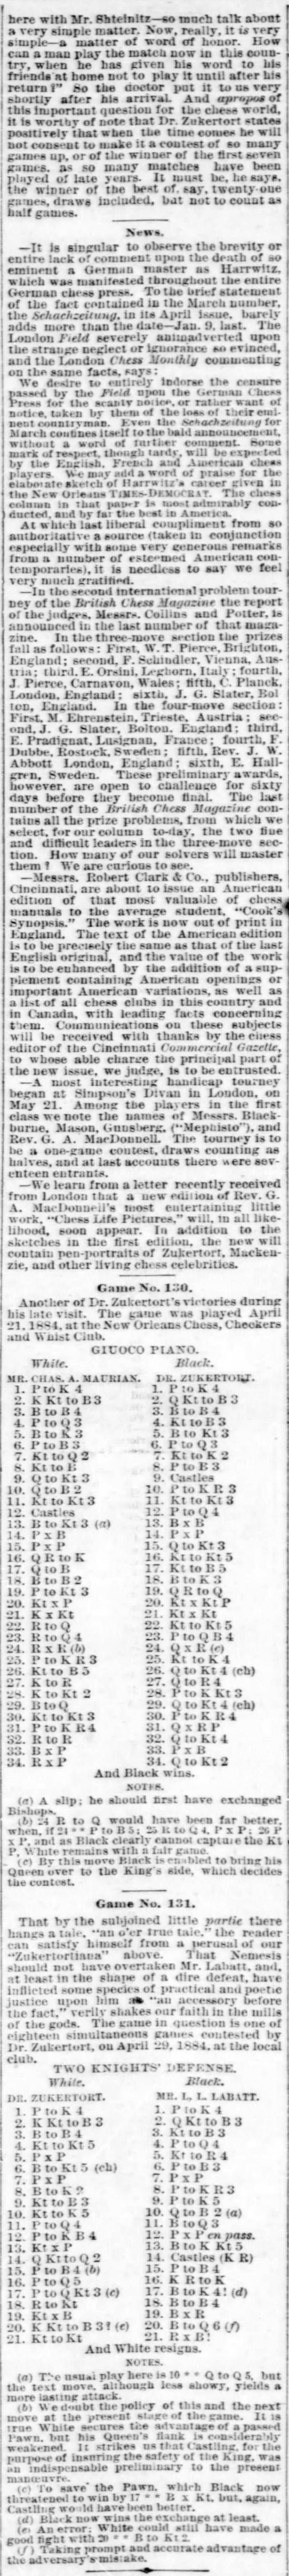 1884.06.01-02 New Orleans Times-Democrat.jpg